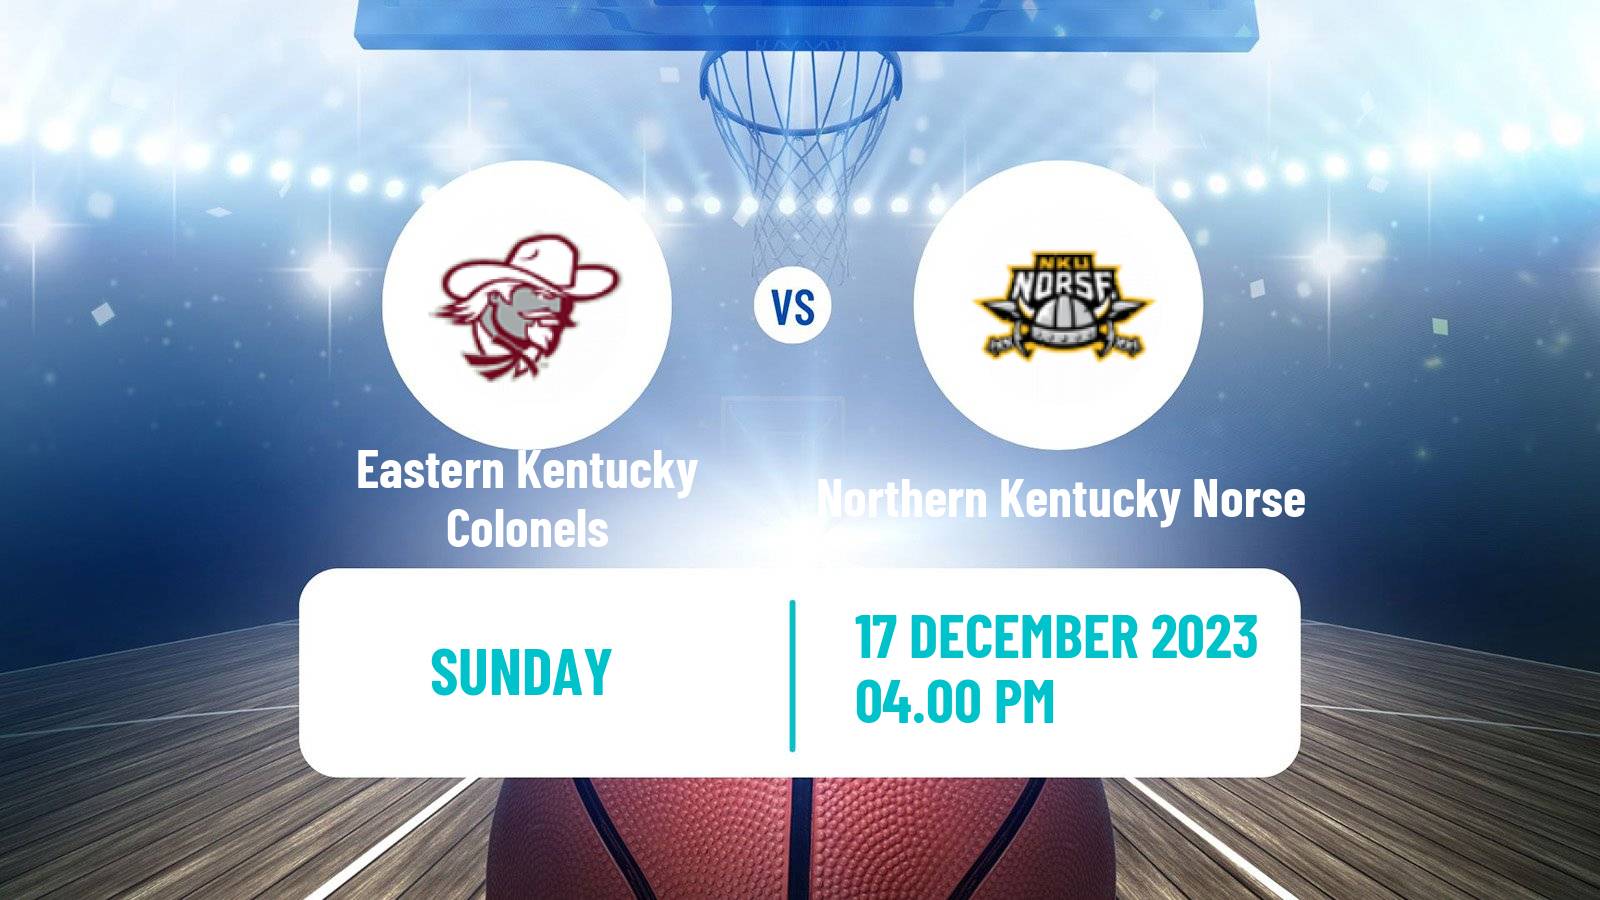 Basketball NCAA College Basketball Eastern Kentucky Colonels - Northern Kentucky Norse